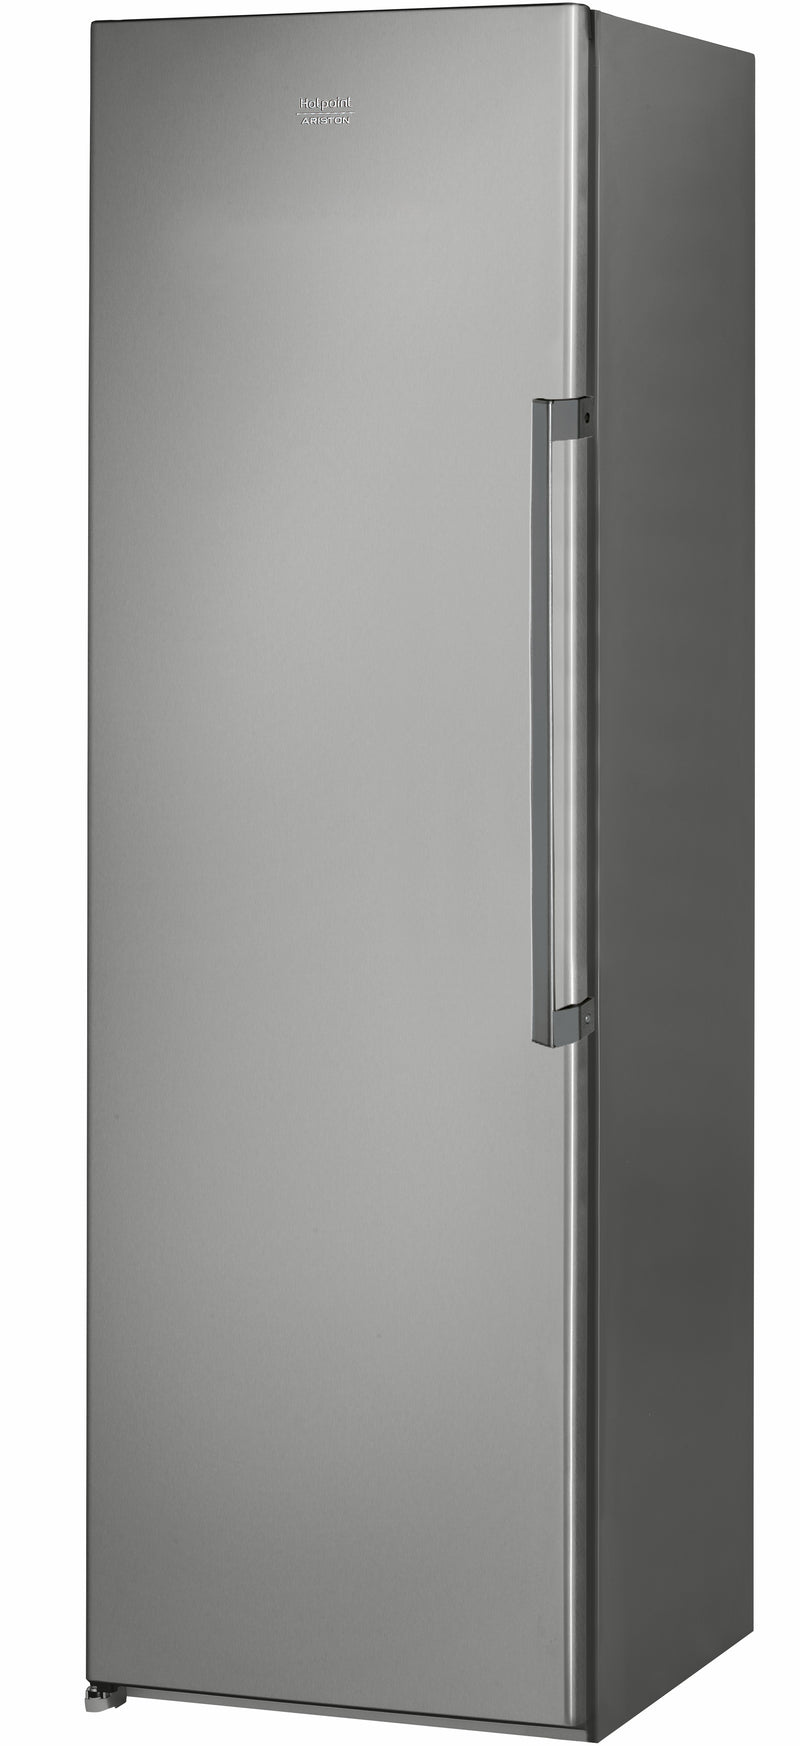 Hotpoint UH8 F1C X 1 congelador/arca frigorífica Arca vertical In